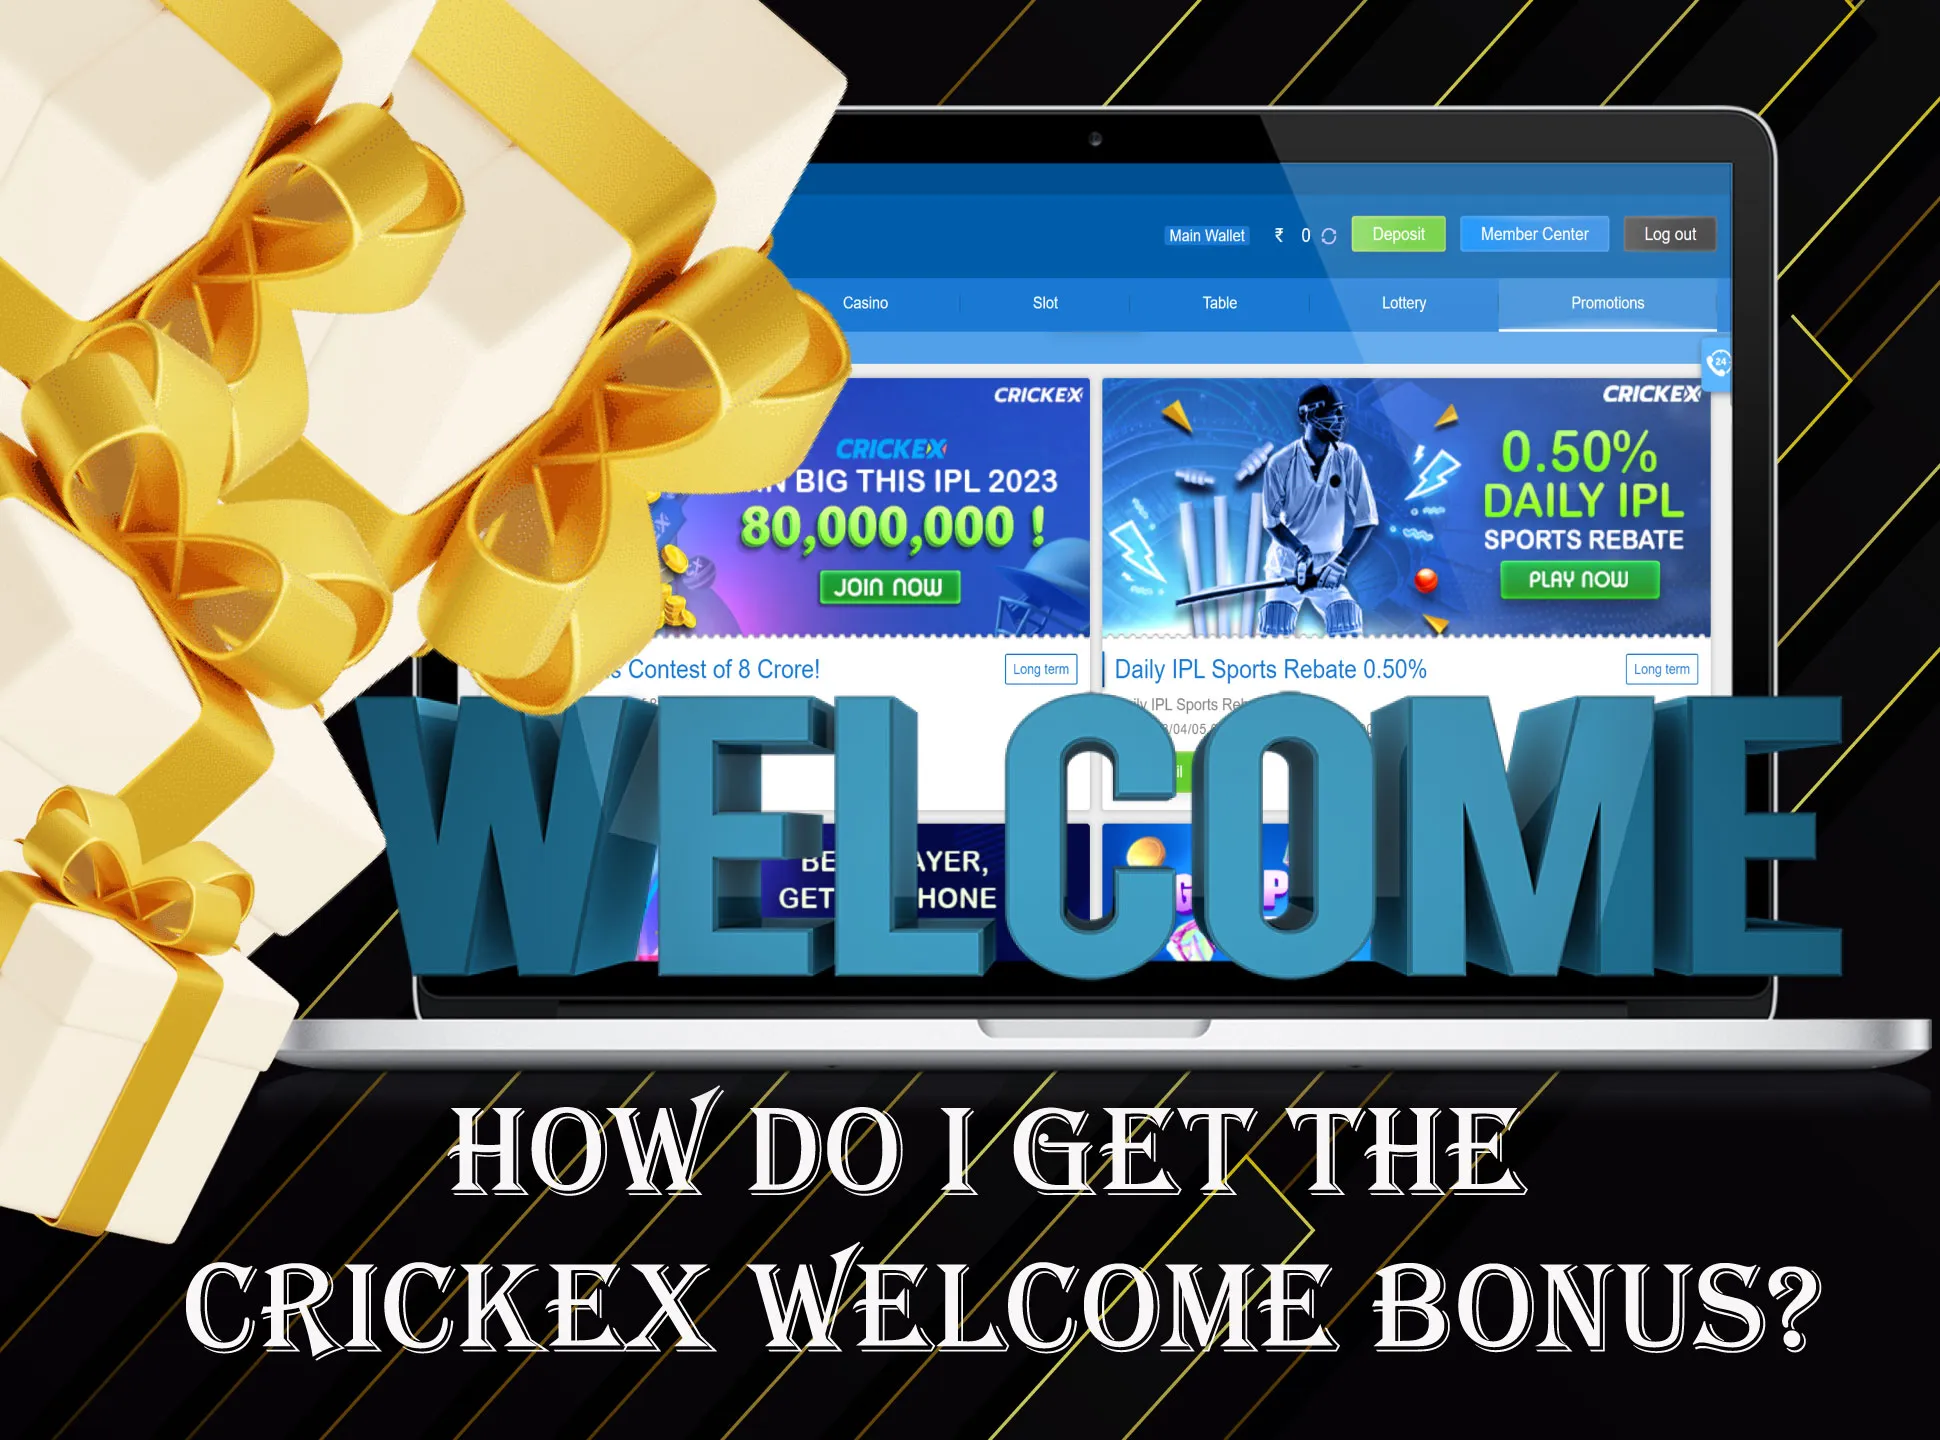 To get the Crickex welcome bonus you should registaer on the Crickex website.